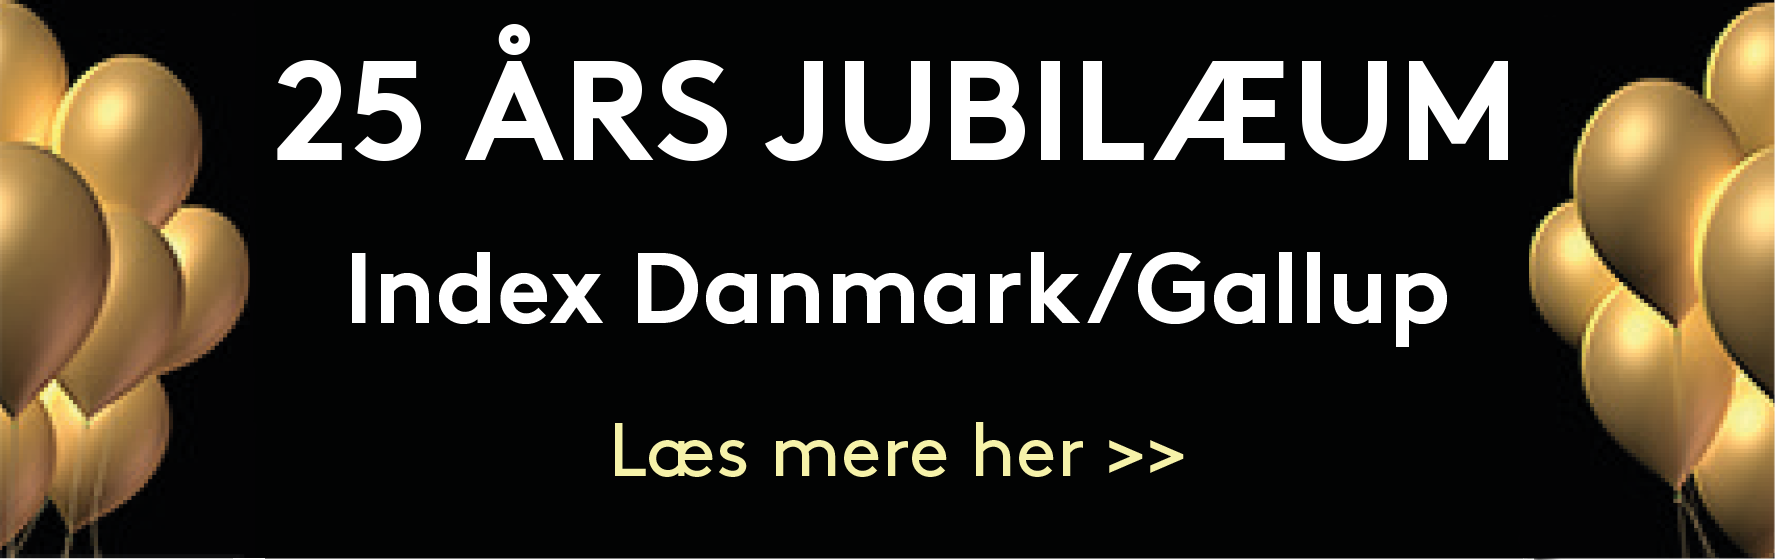 25 års jubilæum Index Danmark